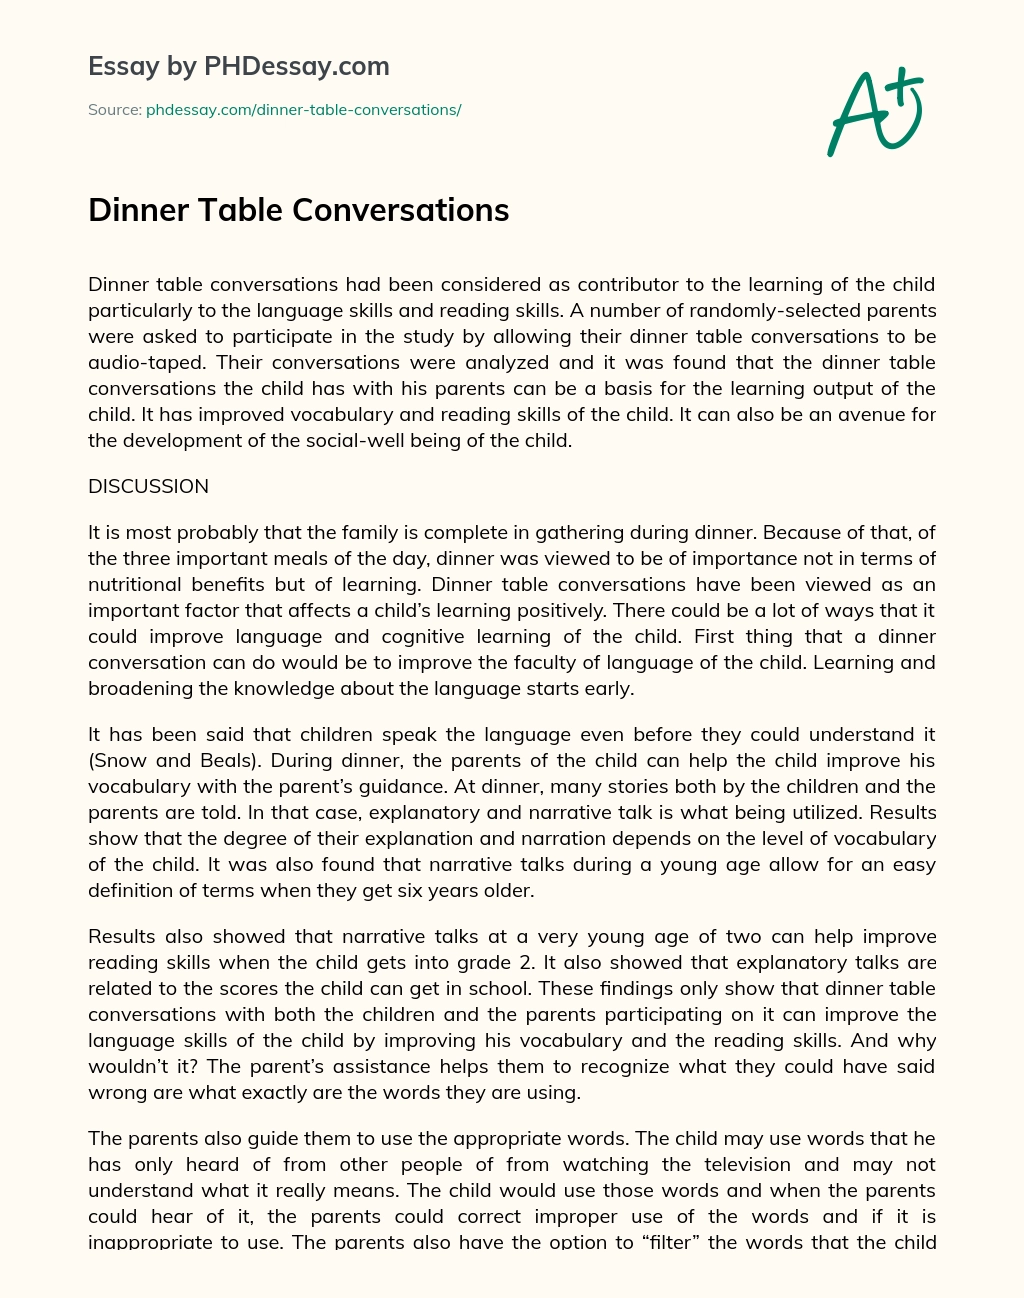 Dinner Table Conversations essay